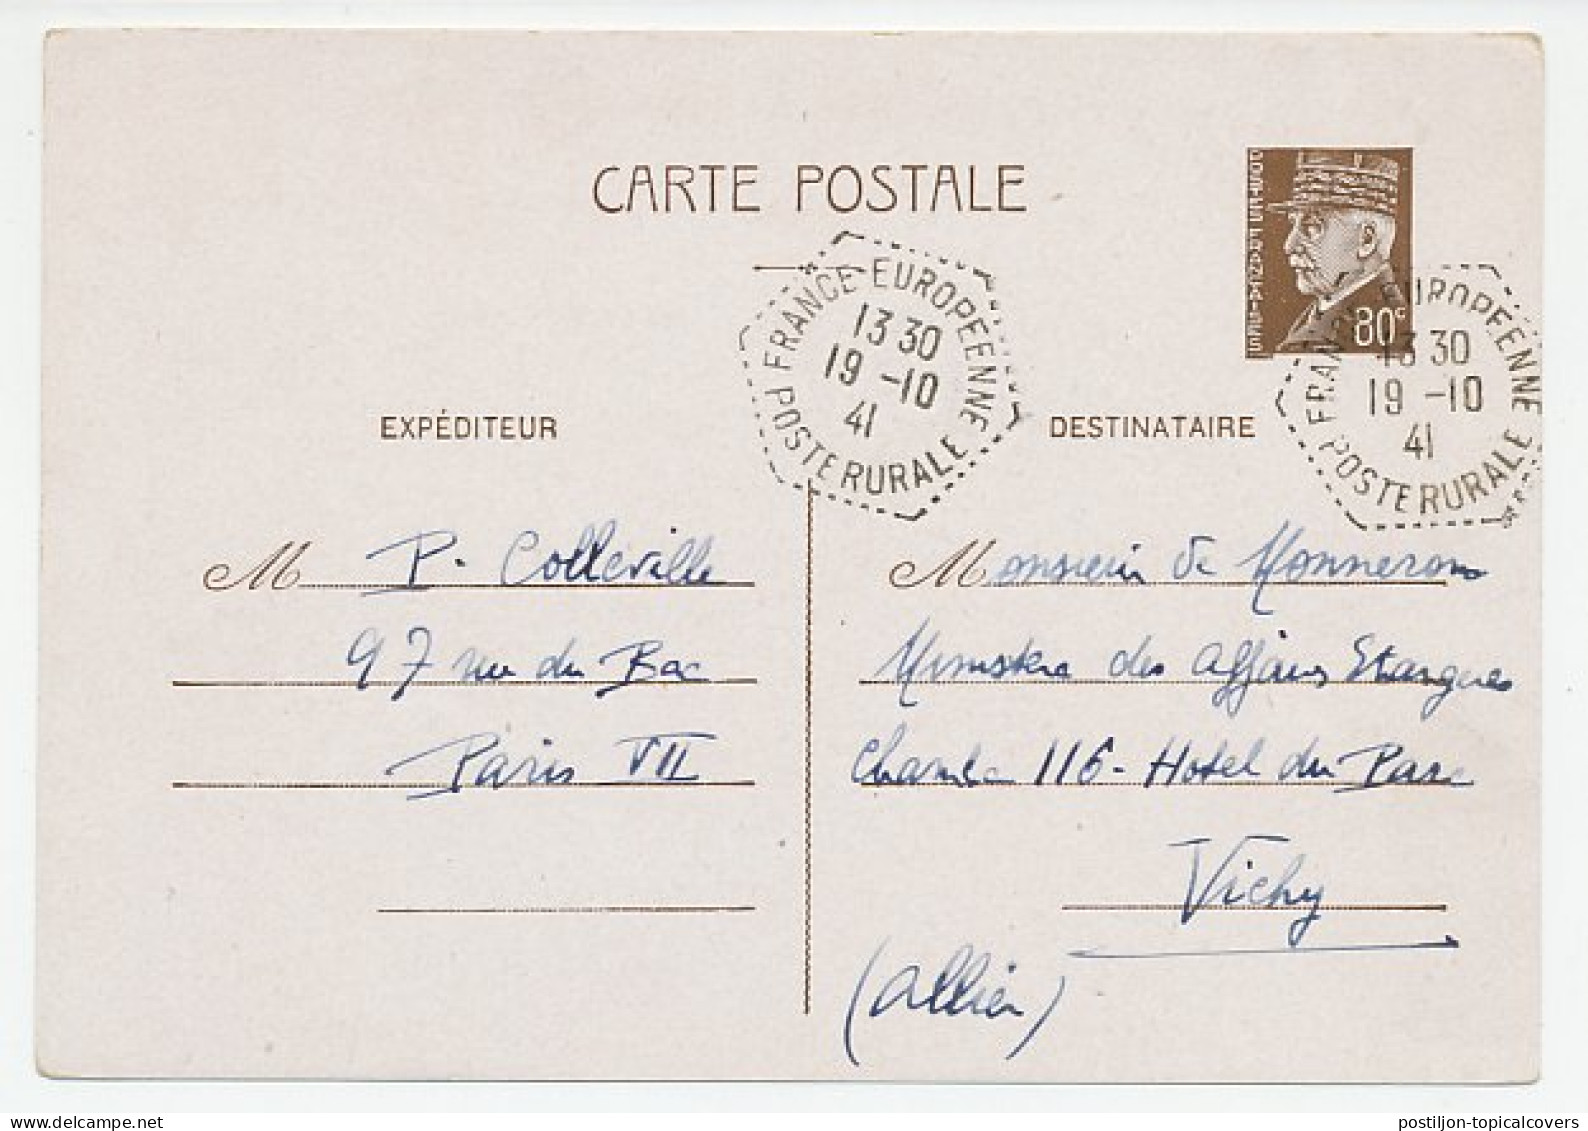 Postcard / Postmark France 1941 The European France - Institutions Européennes